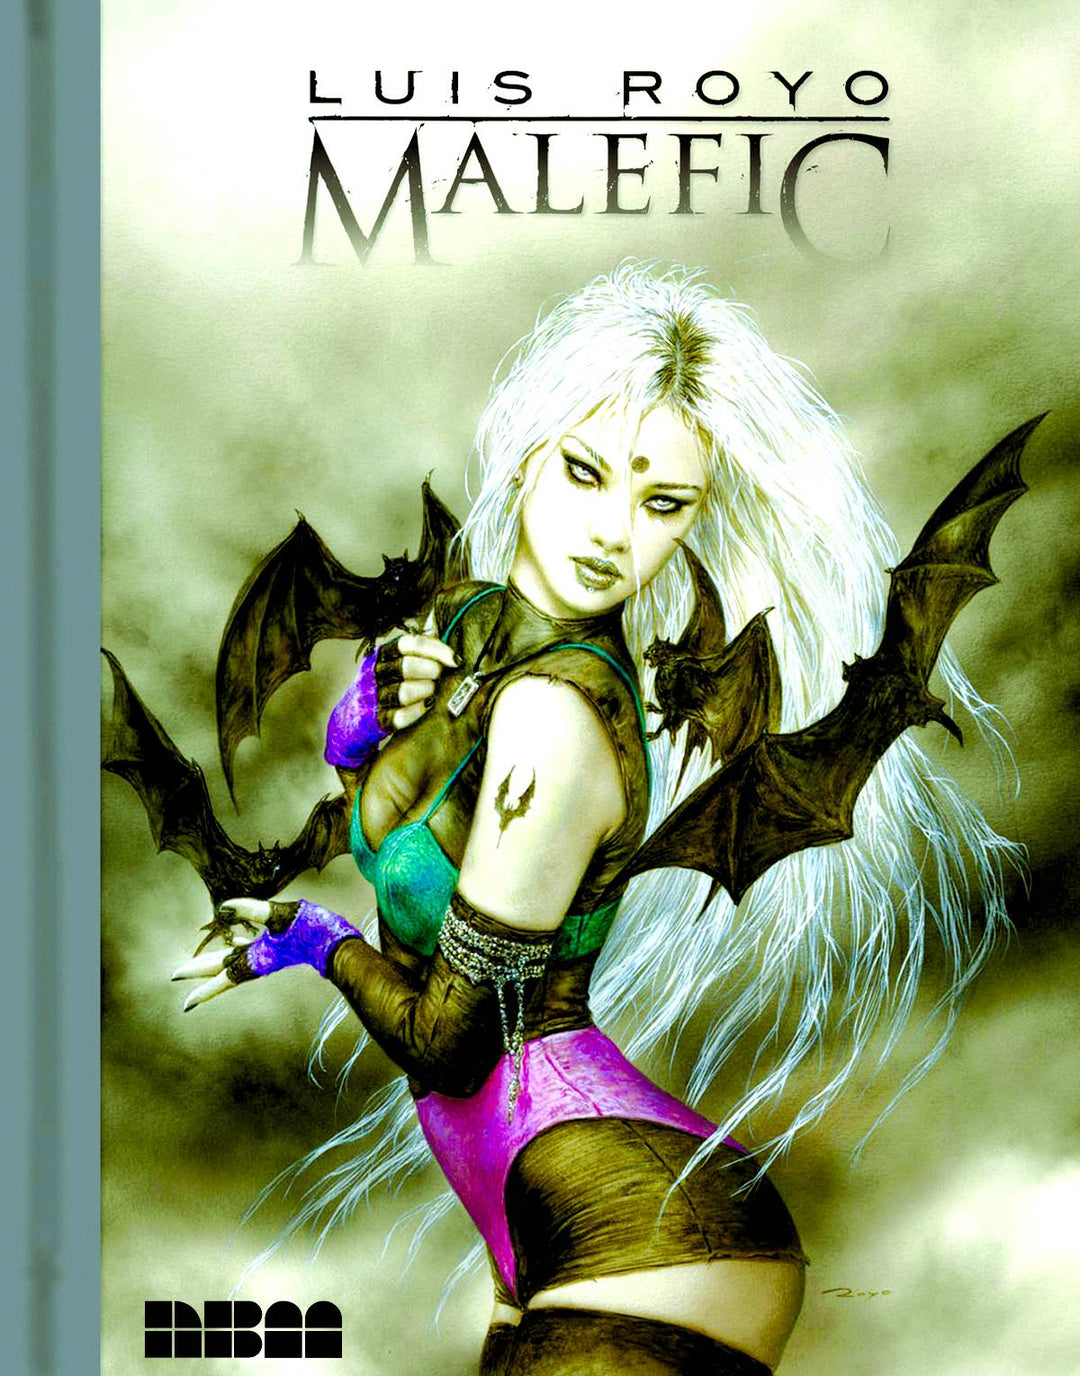 Luis Royo Malefic Hardcover Revised Edition (Mature)